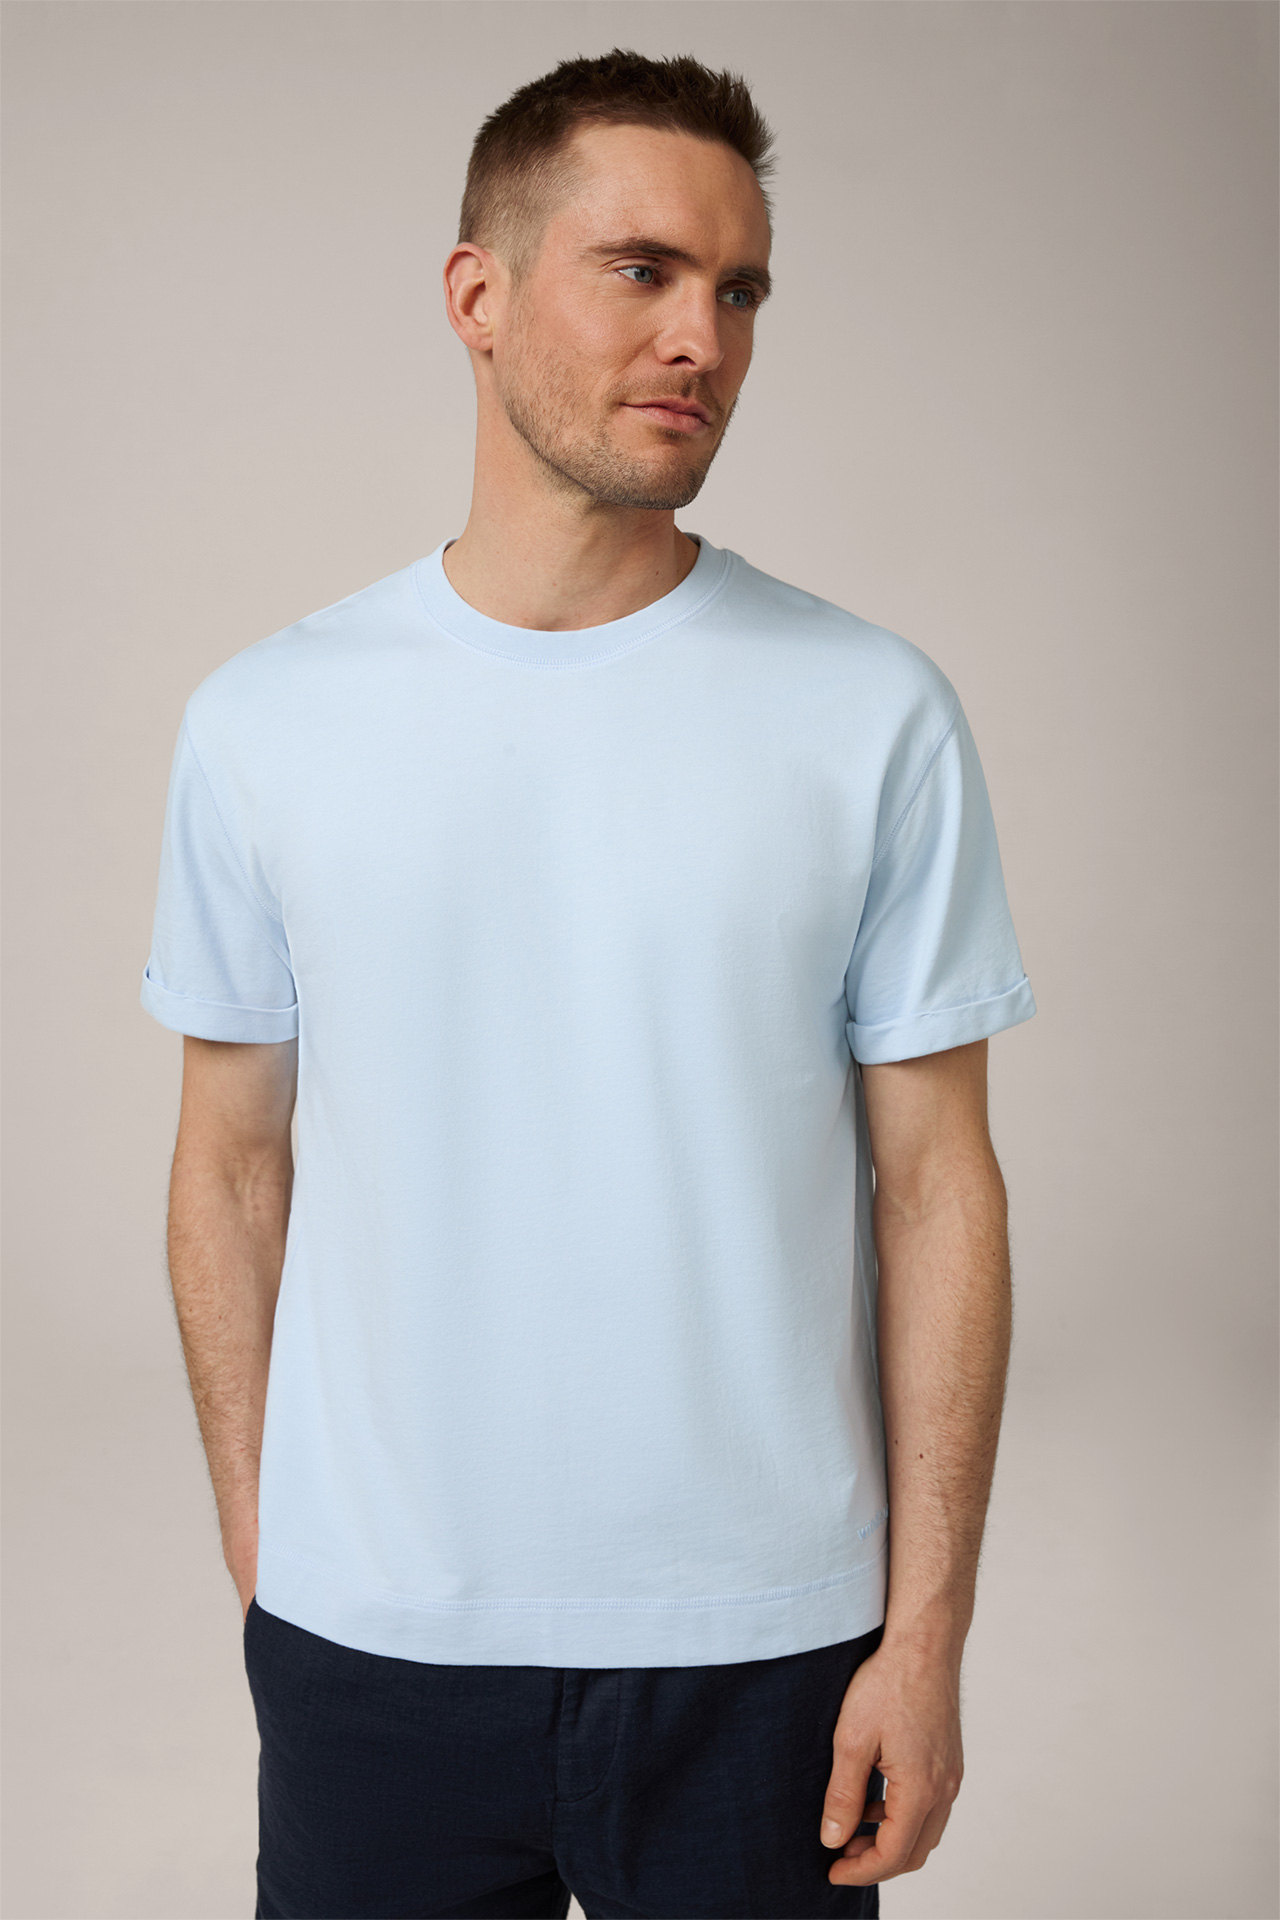 T-shirt en coton Sevo, en bleu clair